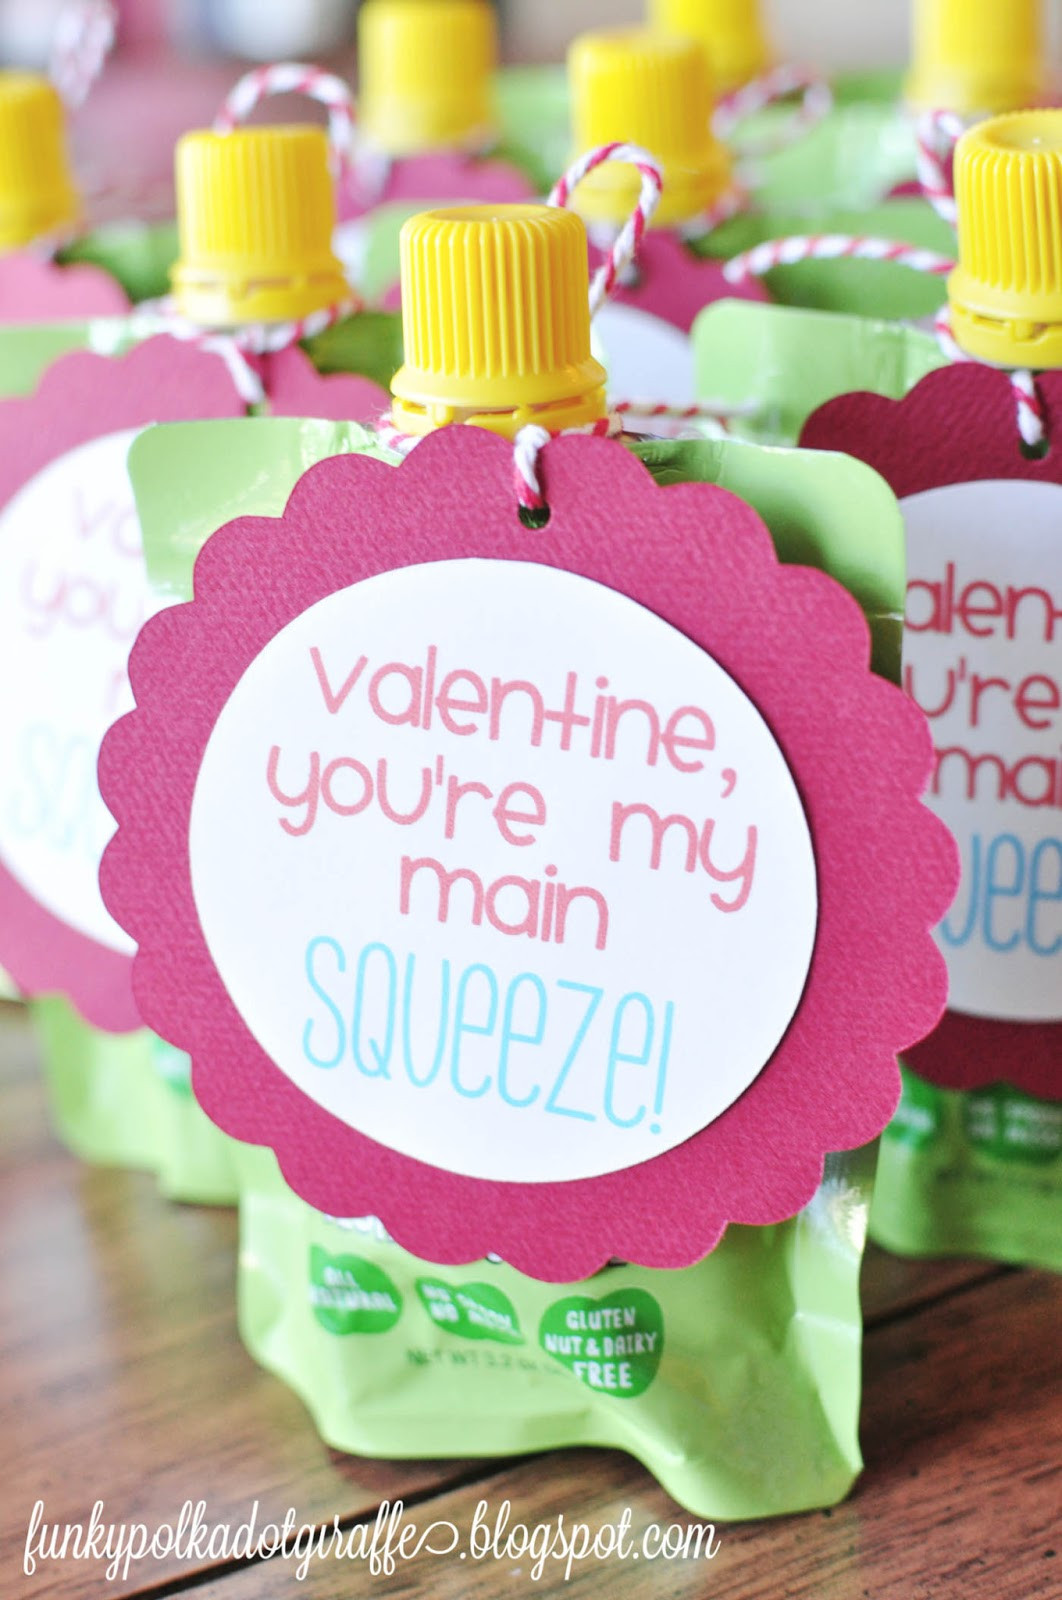 Classroom Valentine Gift Ideas
 Funky Polkadot Giraffe Preschool Valentines You re My